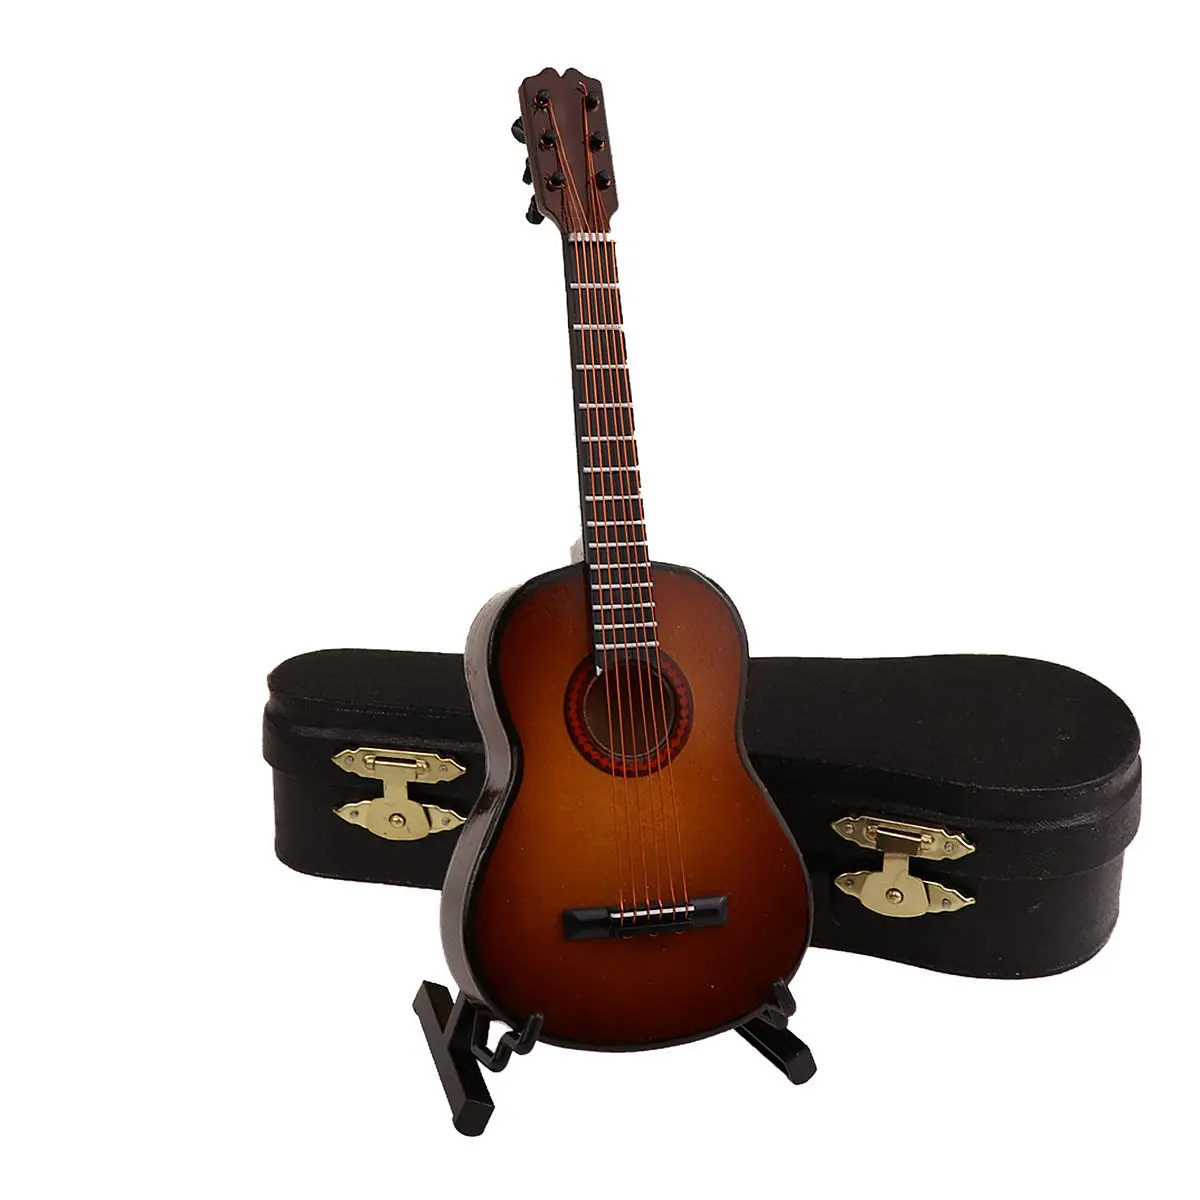 2023 hot seller miniature guitar violin model birthday gift Wooden musical instrument wholesale